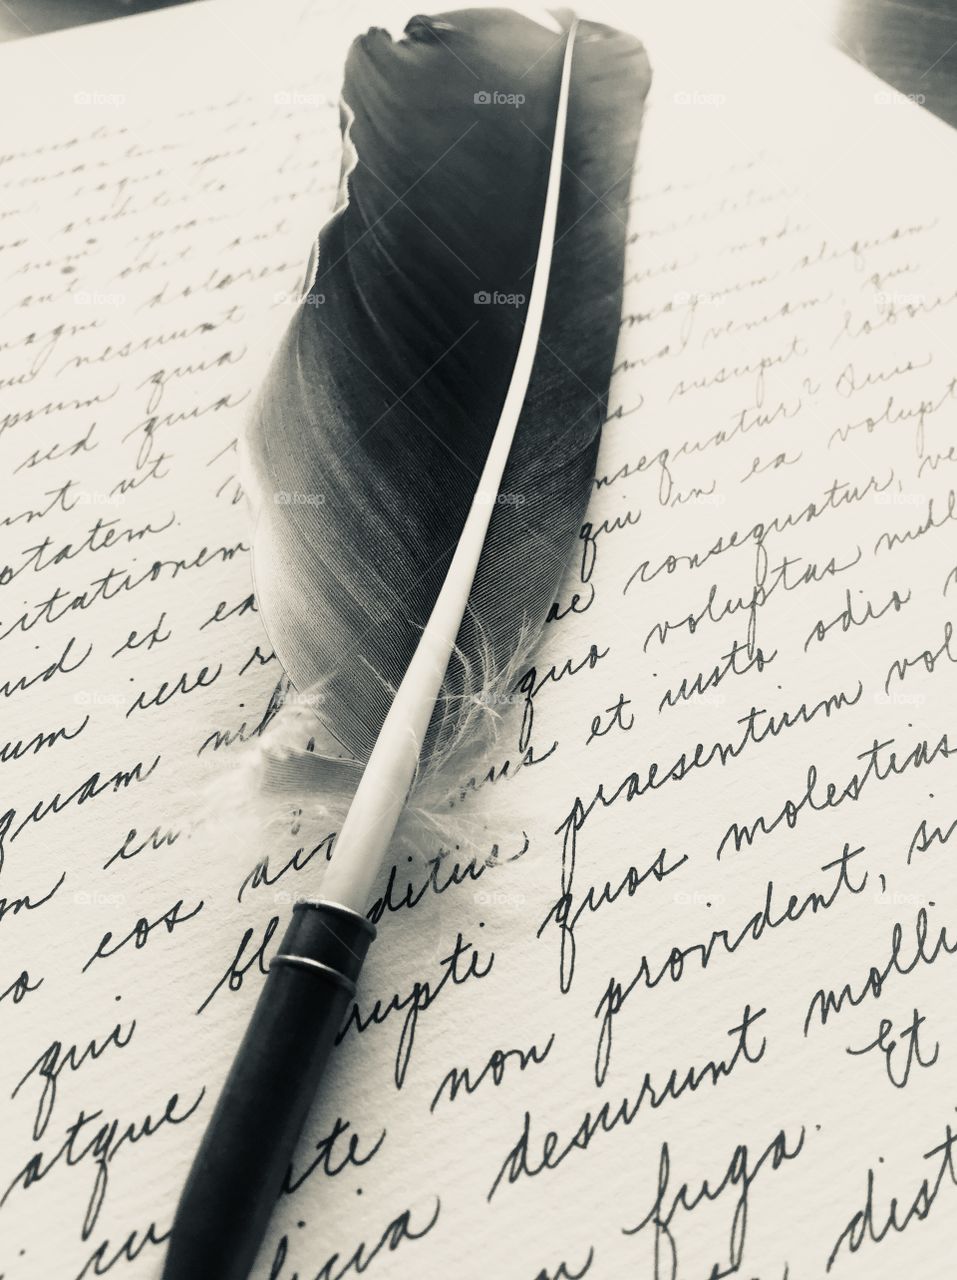 Cursive Letter With Feather Pen